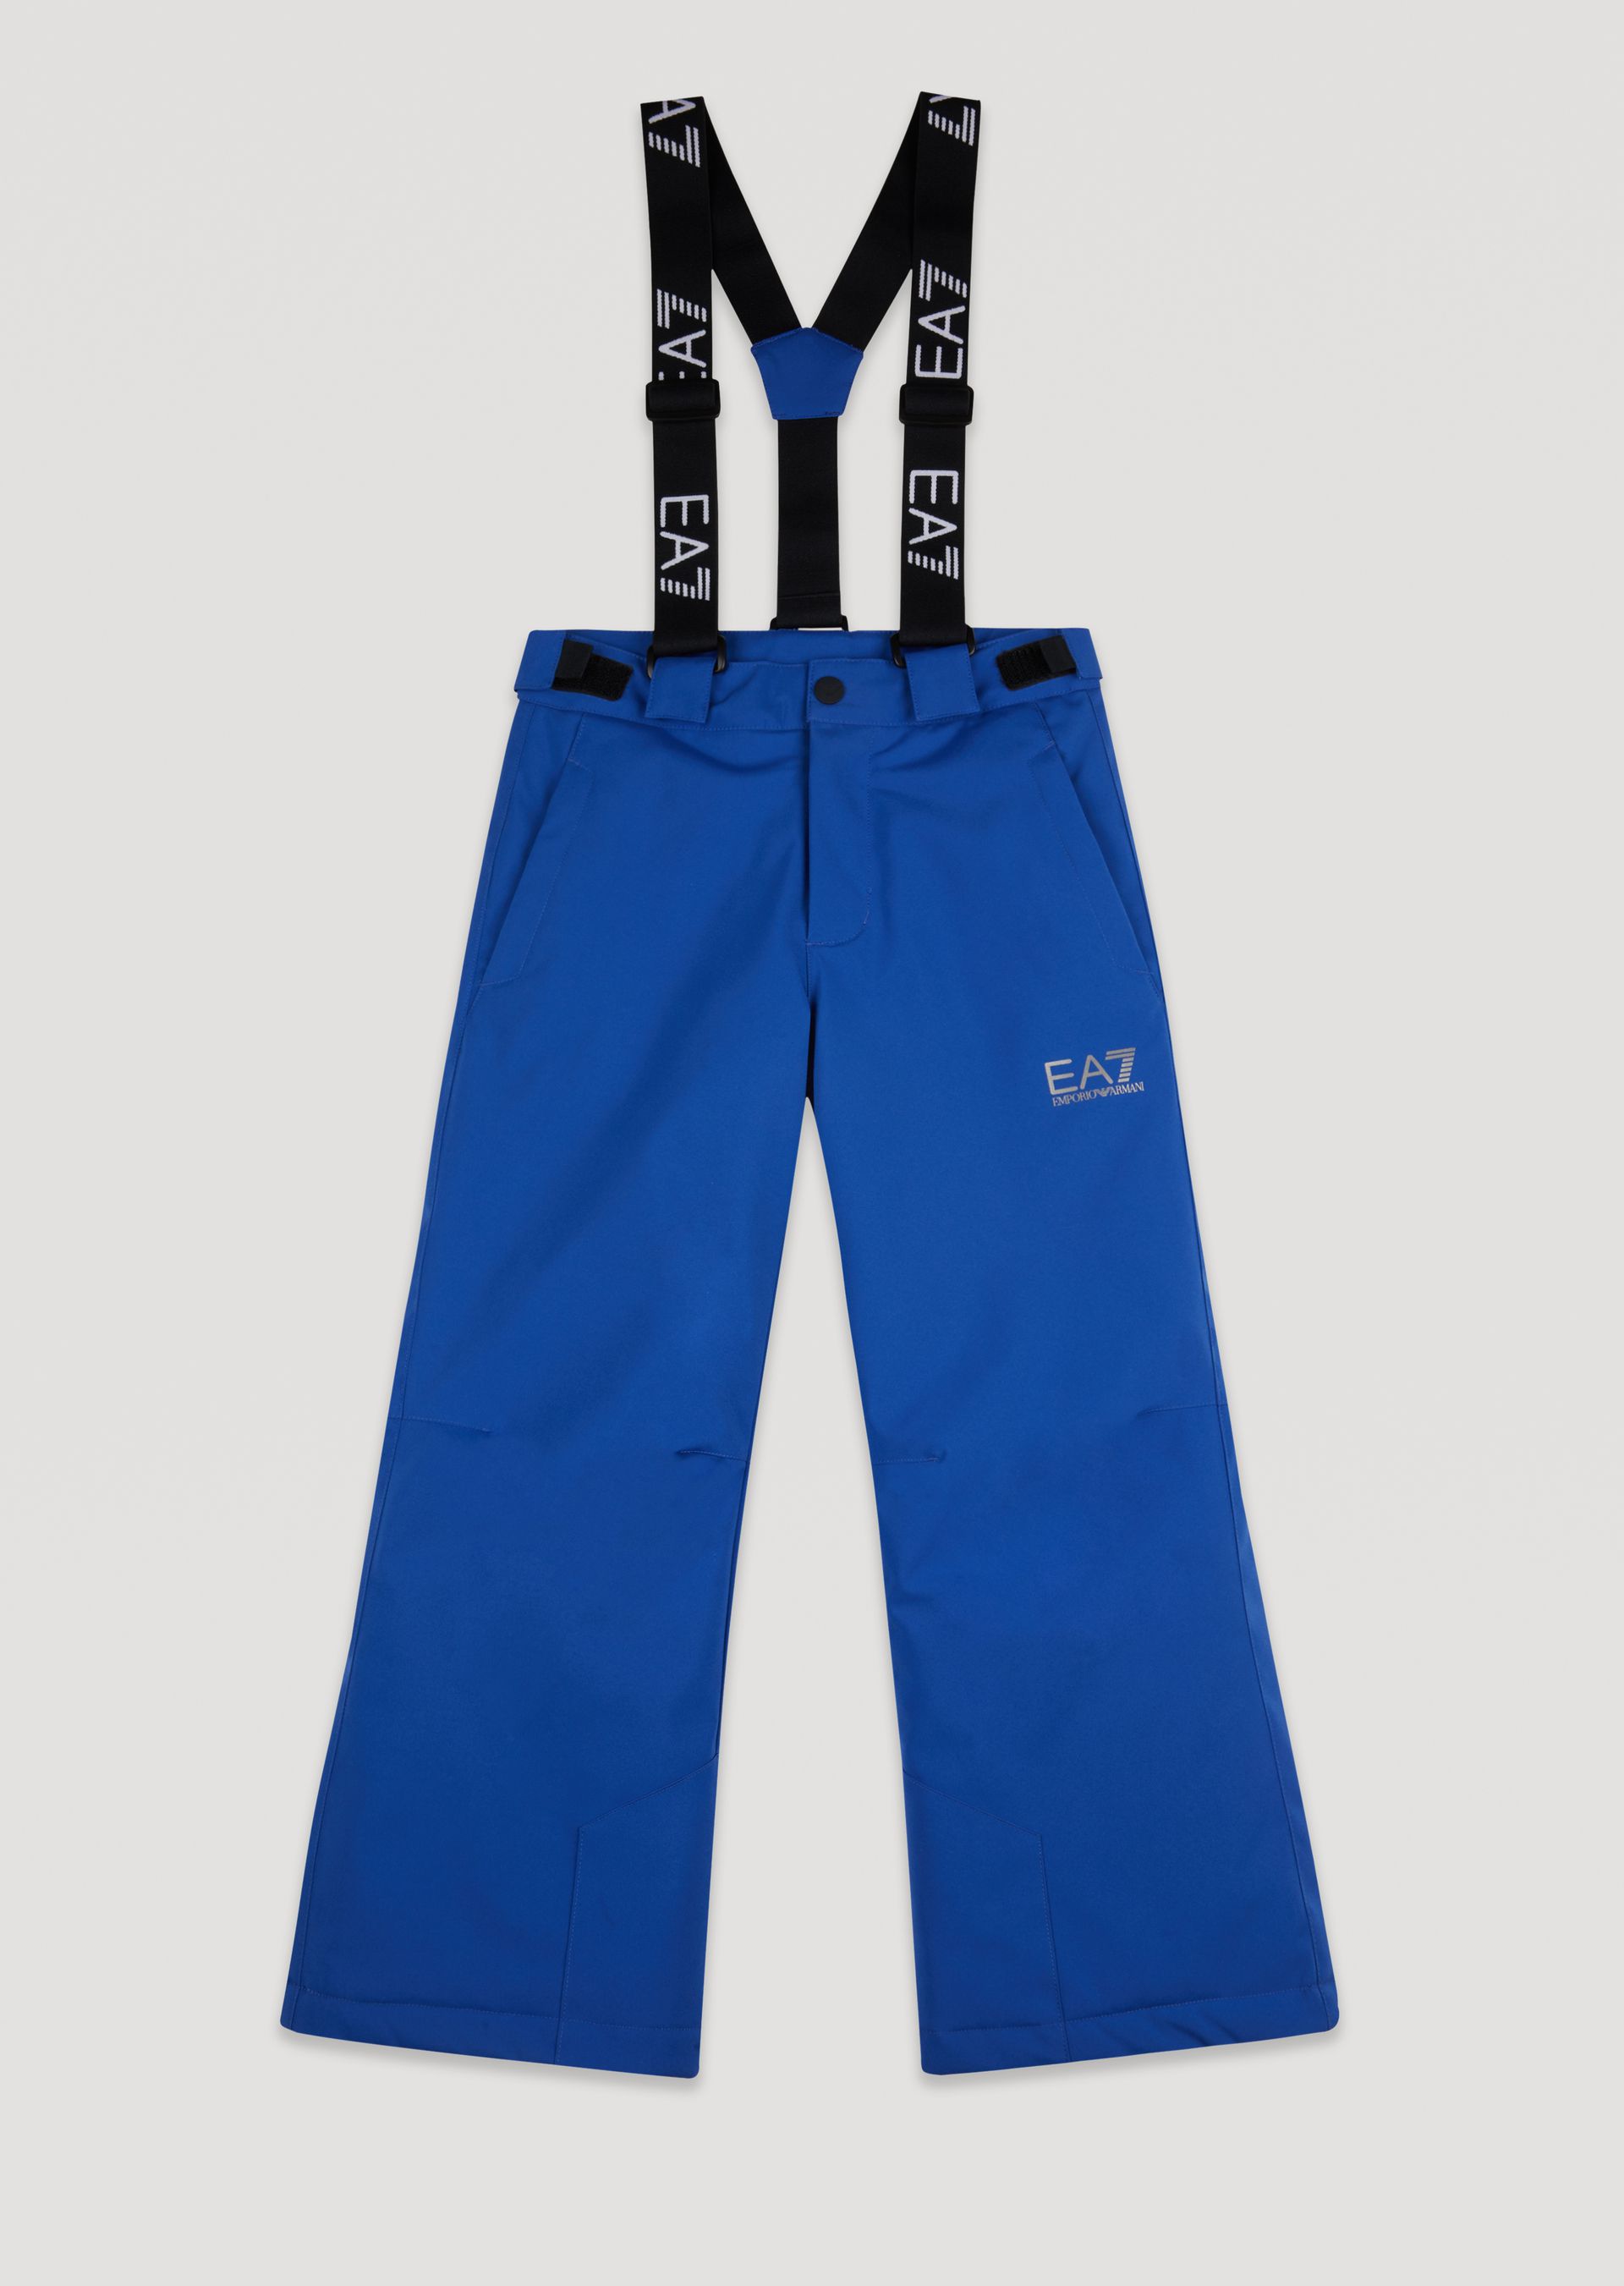 Shop Emporio Armani Ski Pants - Item 